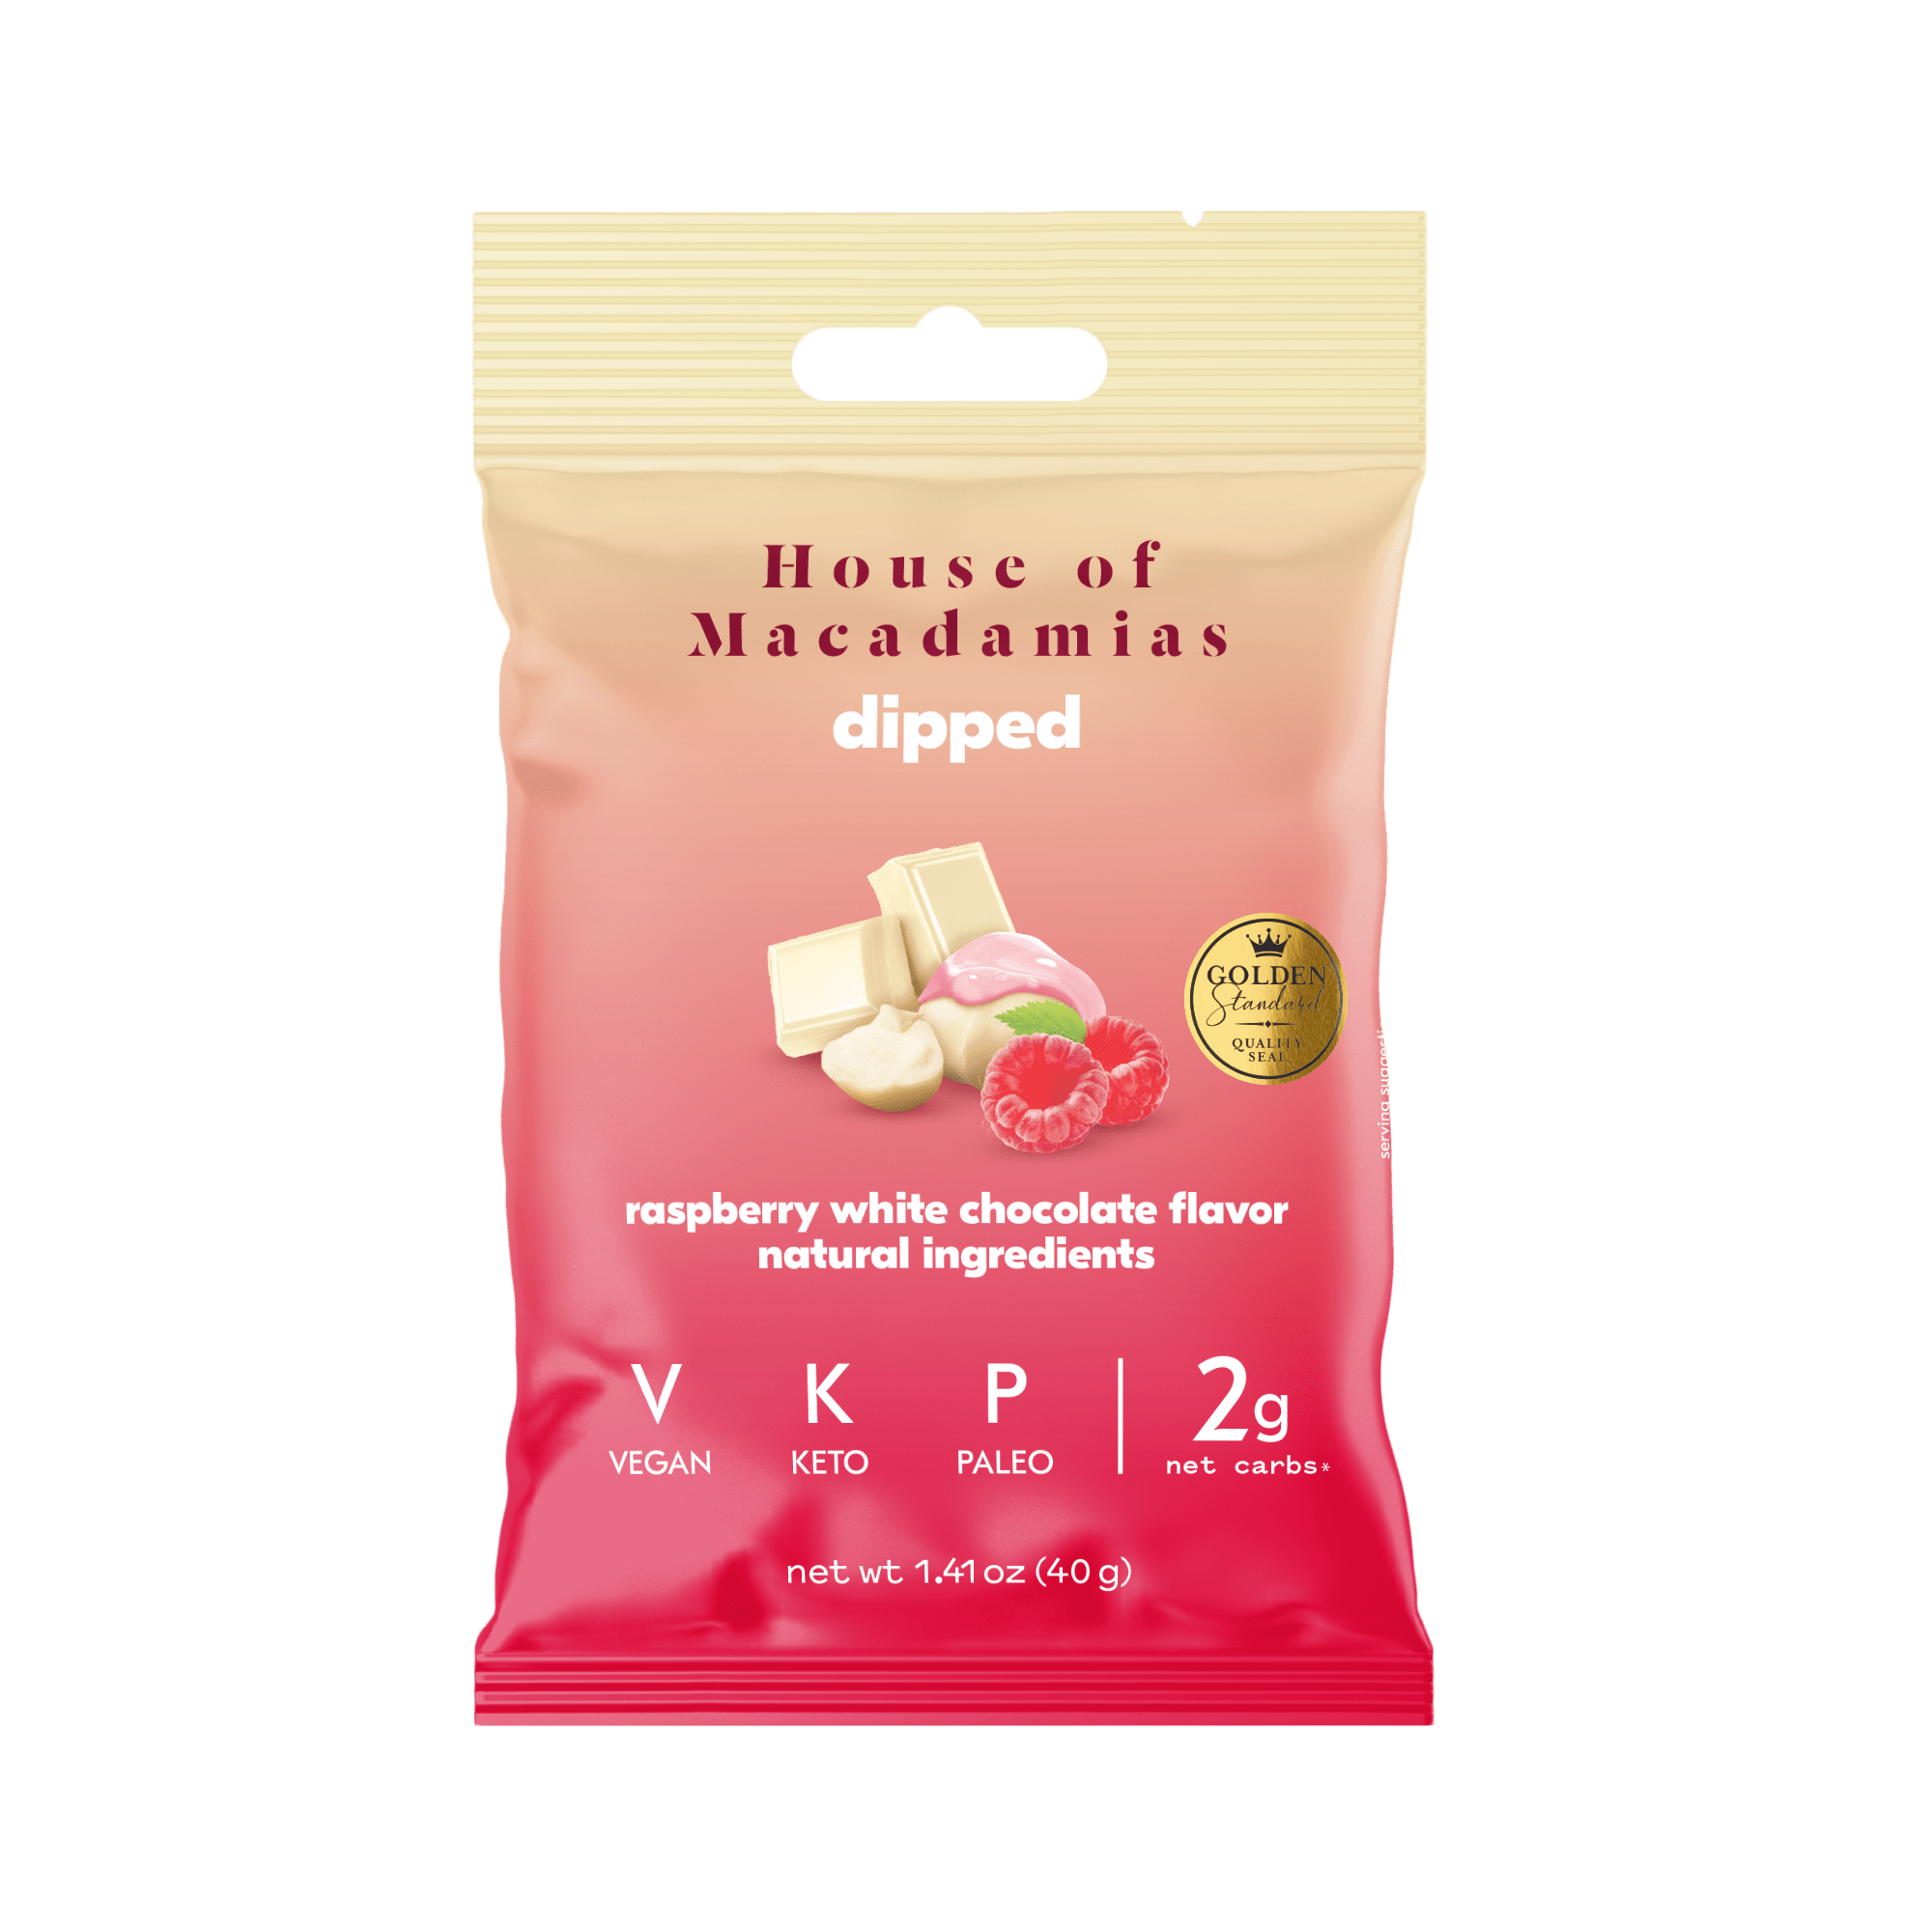 Macadamia Nut Variety Pack (6 Flavors, 12 Bags) - House of Macadamias - Macadamia nuts